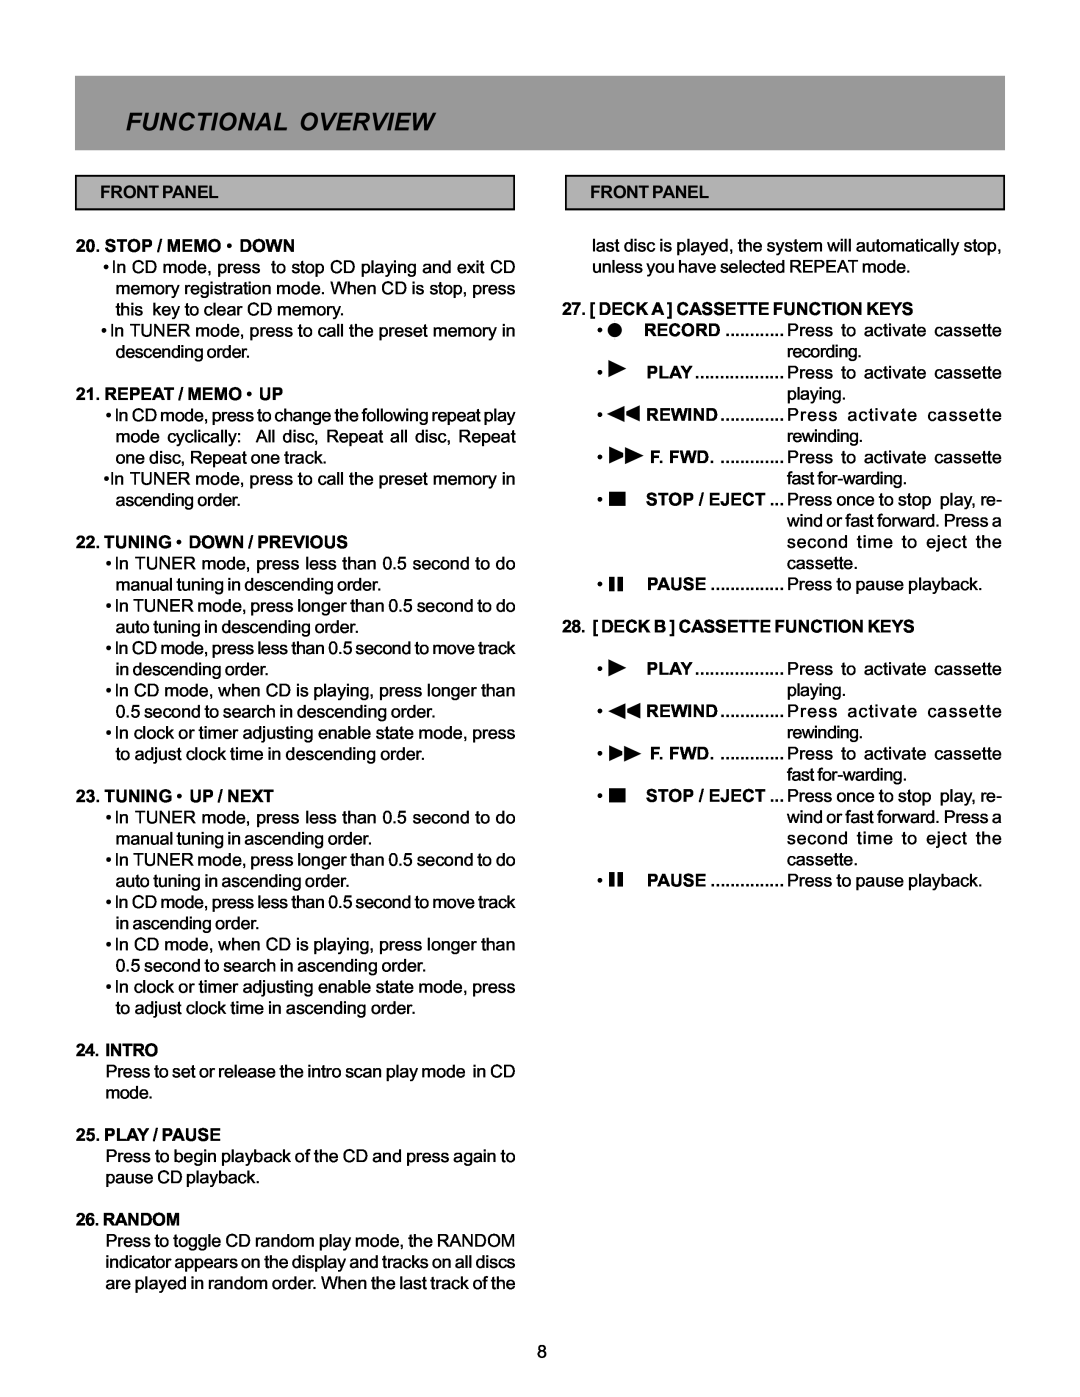 Memorex MX5520SPKA manual Functional Overview, FRONT PANEL 20.STOP / MEMO DOWN 